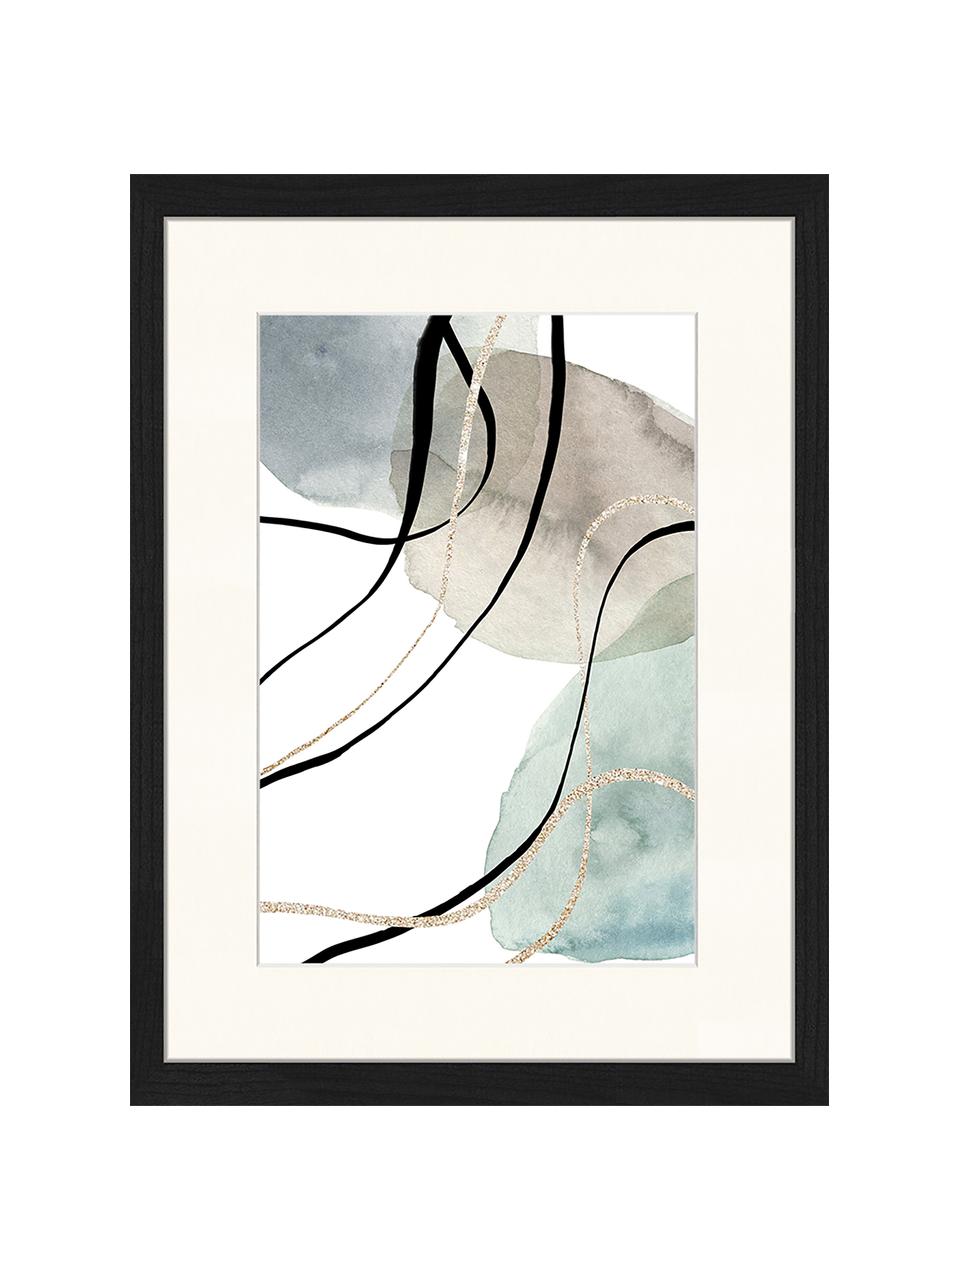 Gerahmter Digitaldruck Geometric Poster, Bild: Digitaldruck auf Papier, , Rahmen: Holz, lackiert, Front: Plexiglas, Mehrfarbig, 33 x 43 cm